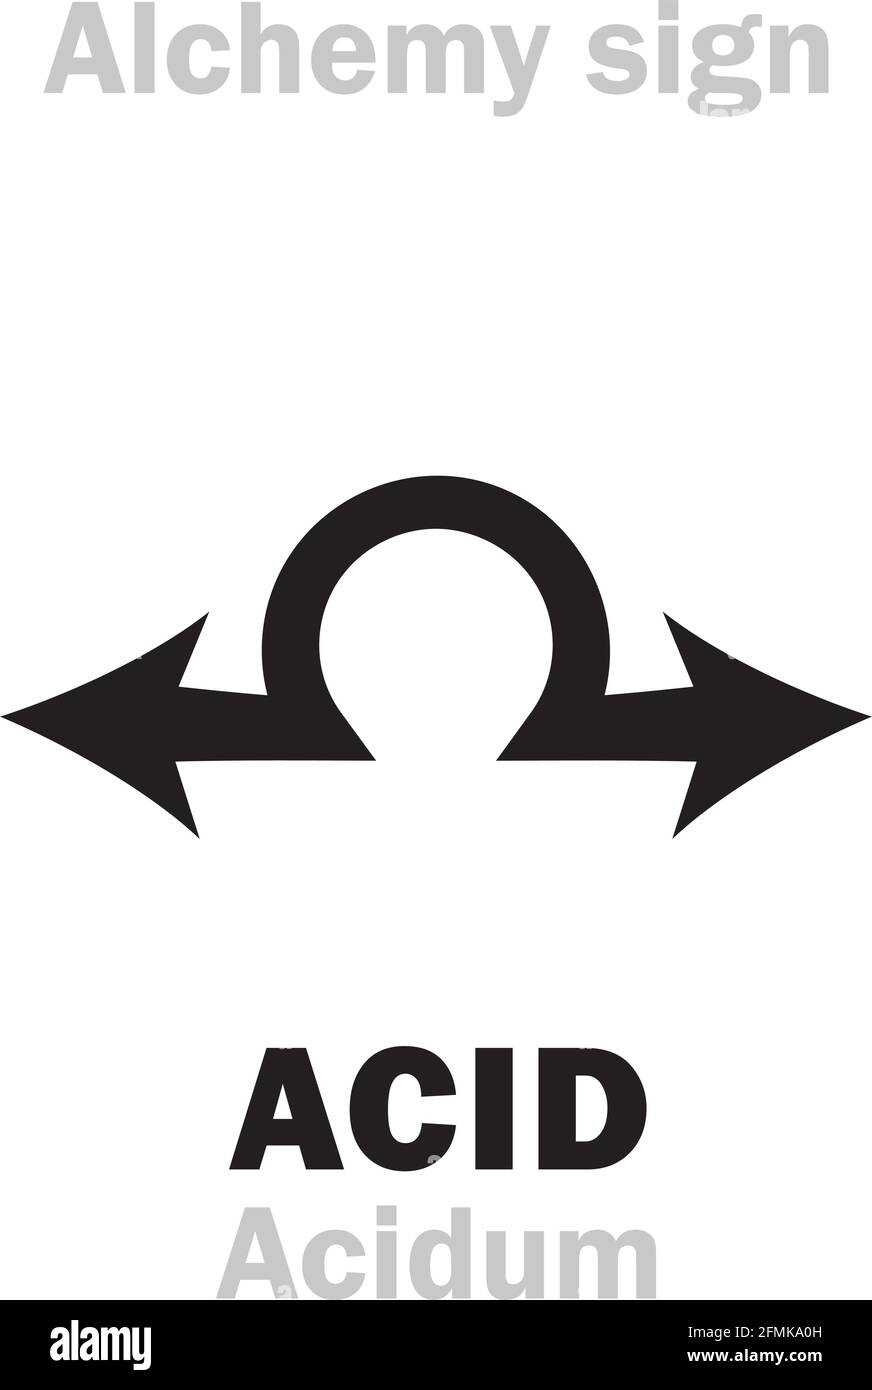 Alchemy Alphabet: ACID (Acidum), Acidic substance, corrosive sour-tasting liquid, neutralizes alkalis, dissolves some metals. Oxidant, oxidizer. Stock Vector